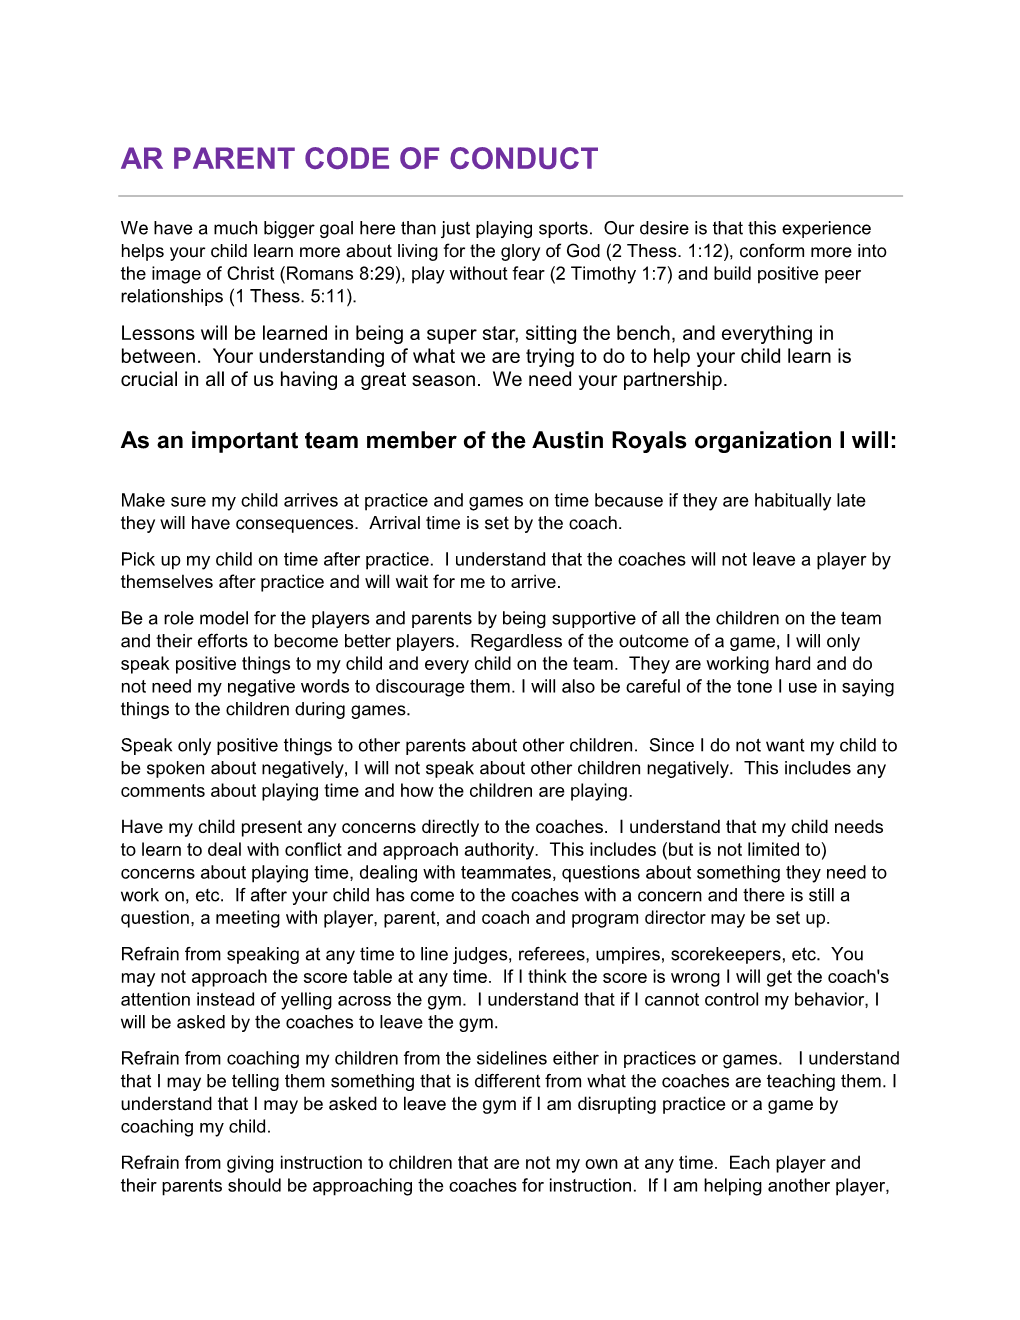 Ar Parent Code of Conduct